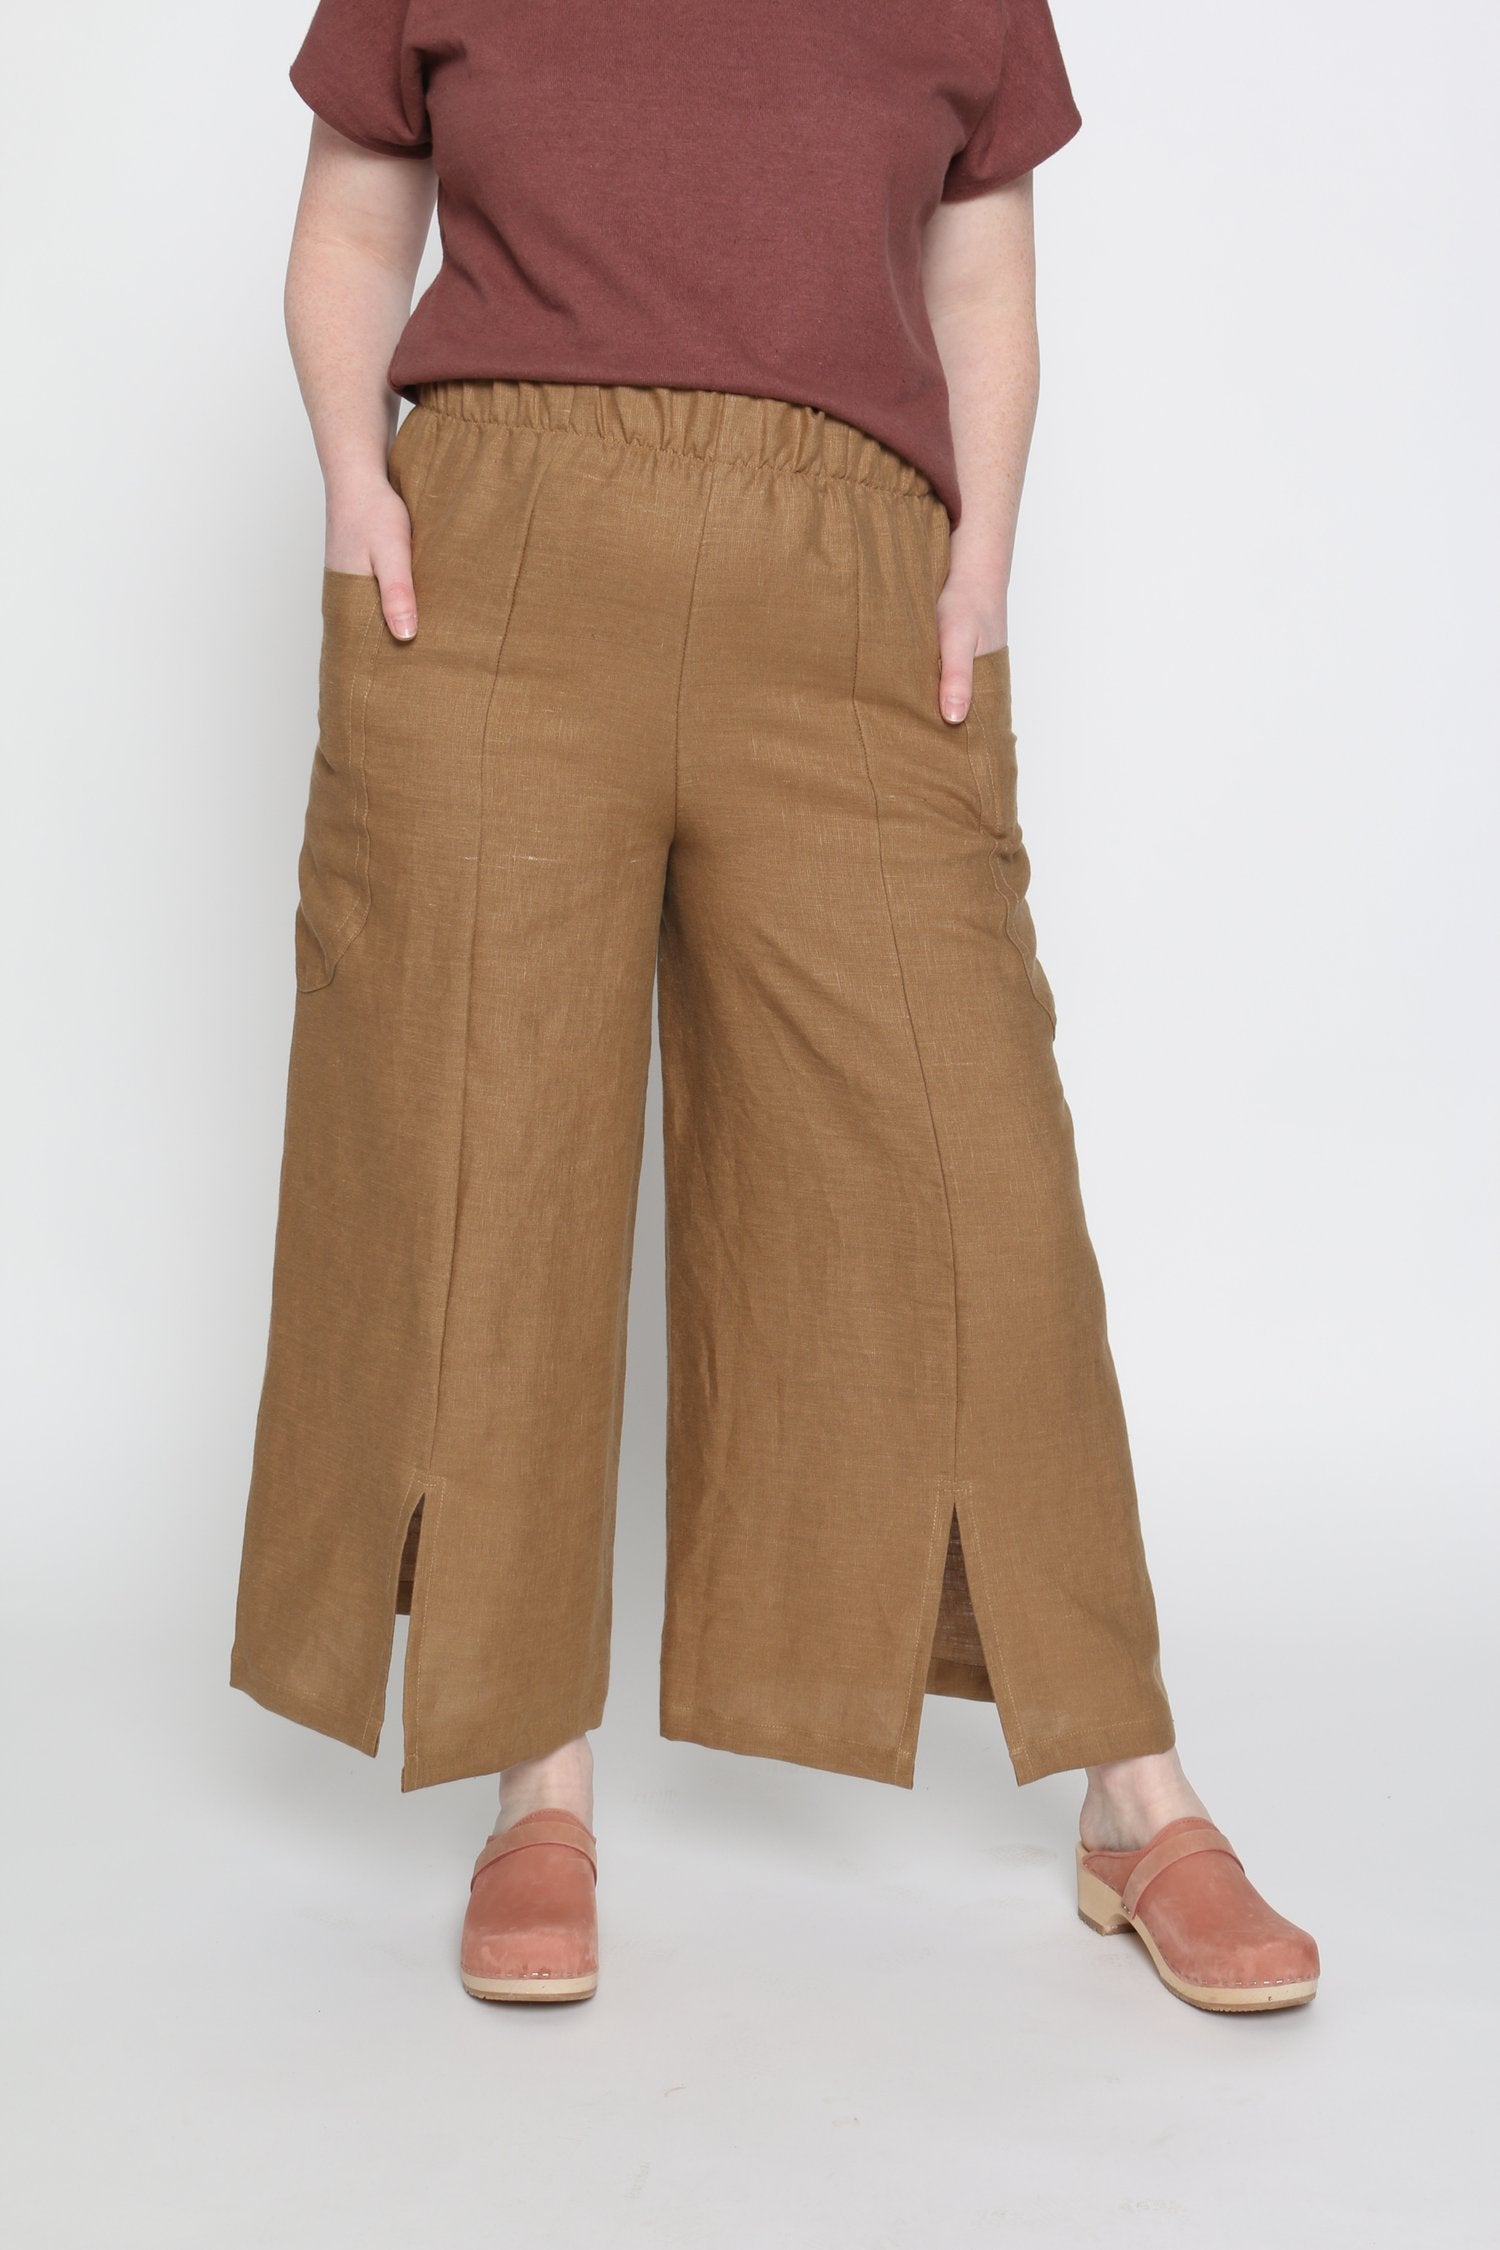 Conscious Clothing Organic Cotton + Hemp Zero Waste Pants - Ginger – Terra  Shepherd Boutique & Apothecary